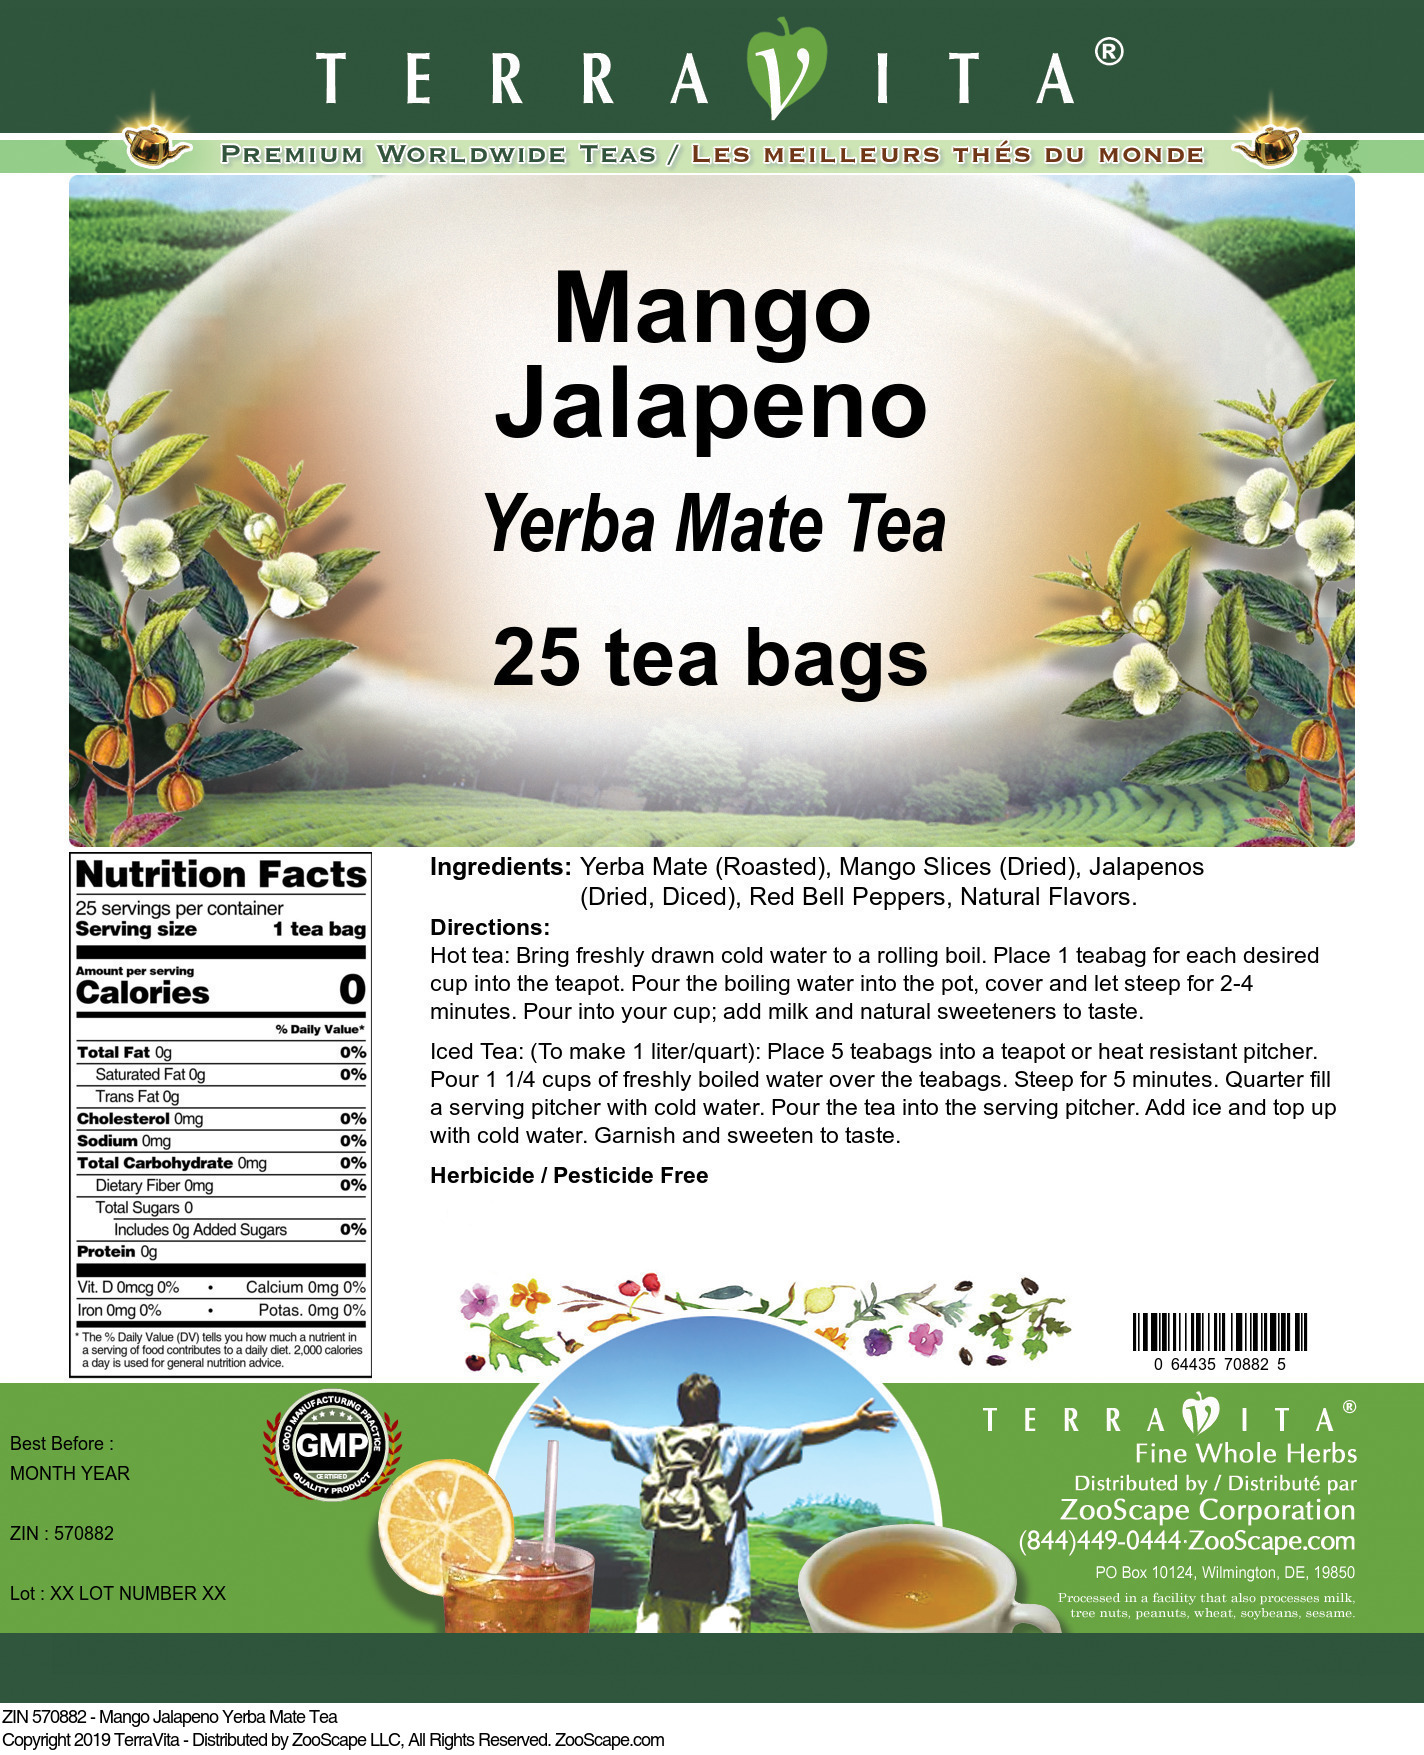 Mango Jalapeno Yerba Mate Tea - Label